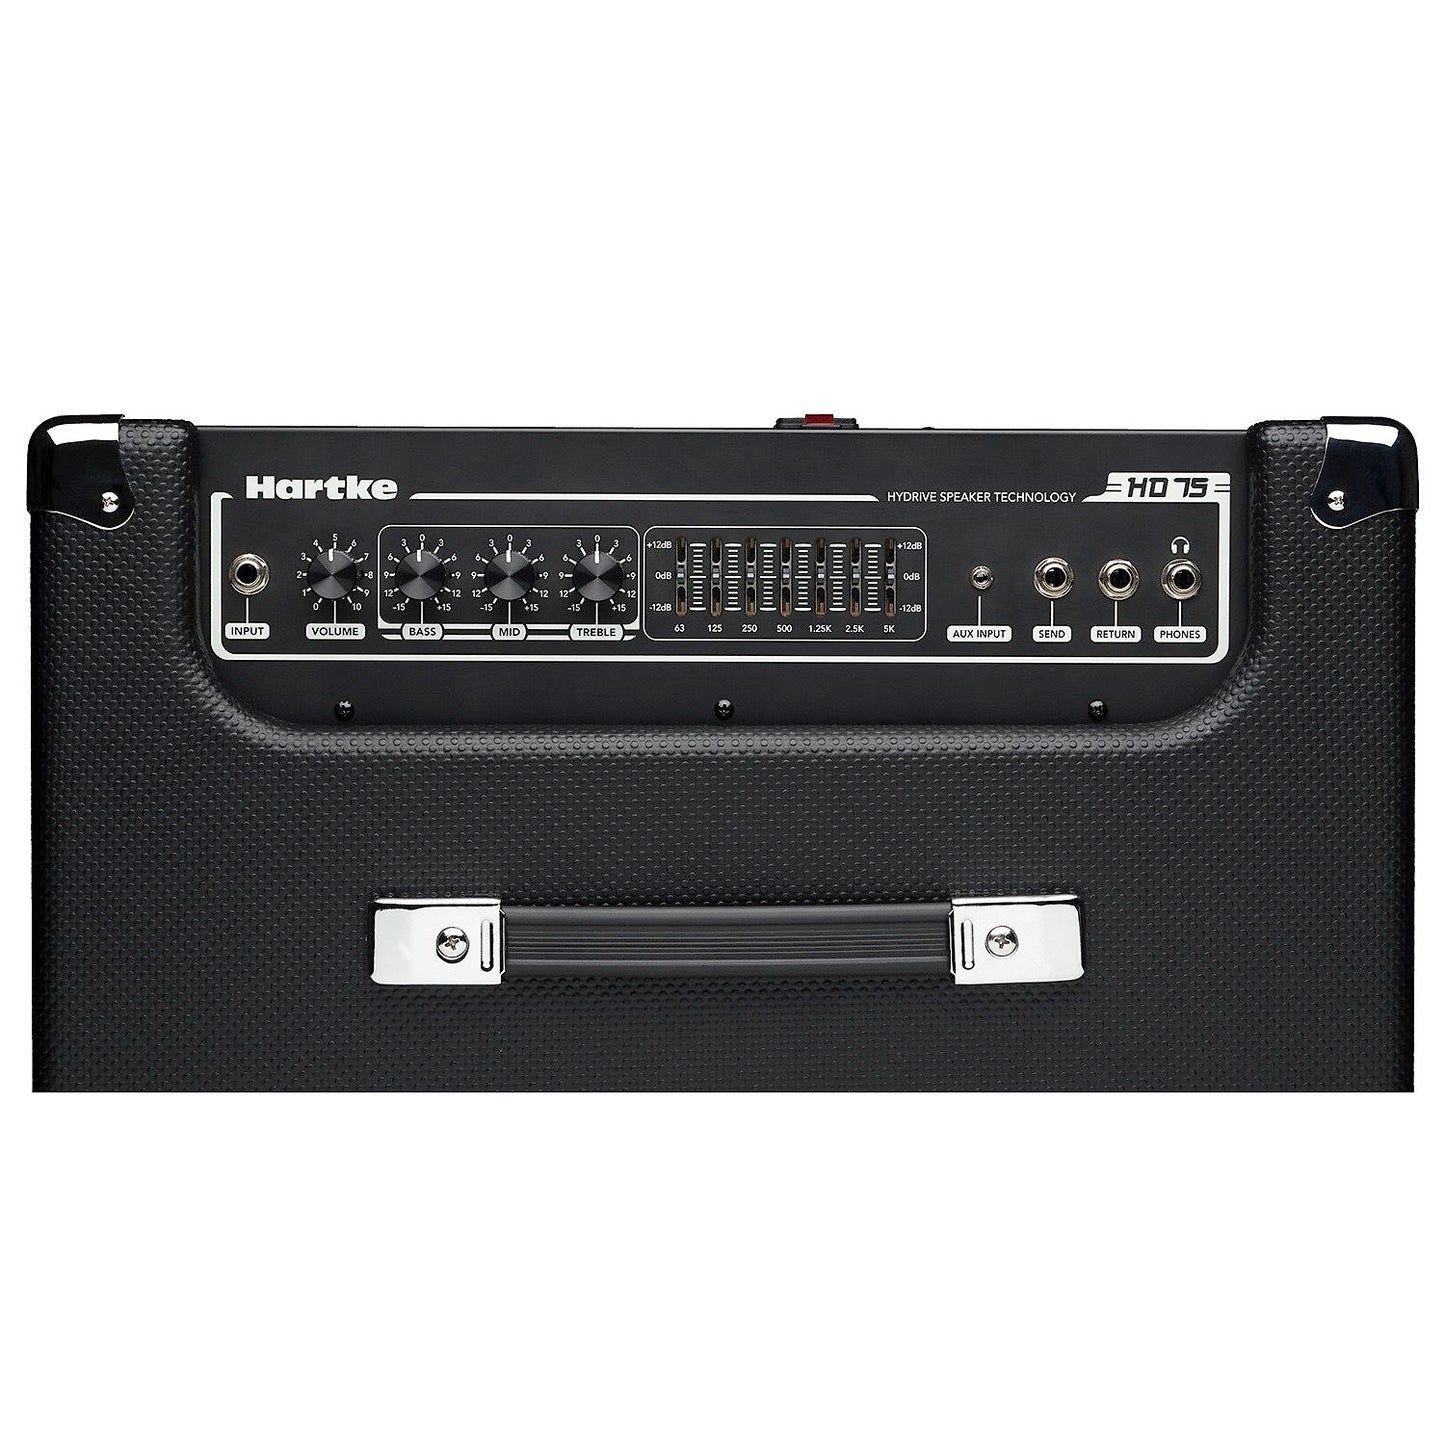 Hartke HD75 HyDrive Bass Combo Amplifier (75 Watts, 1x12 Inch)